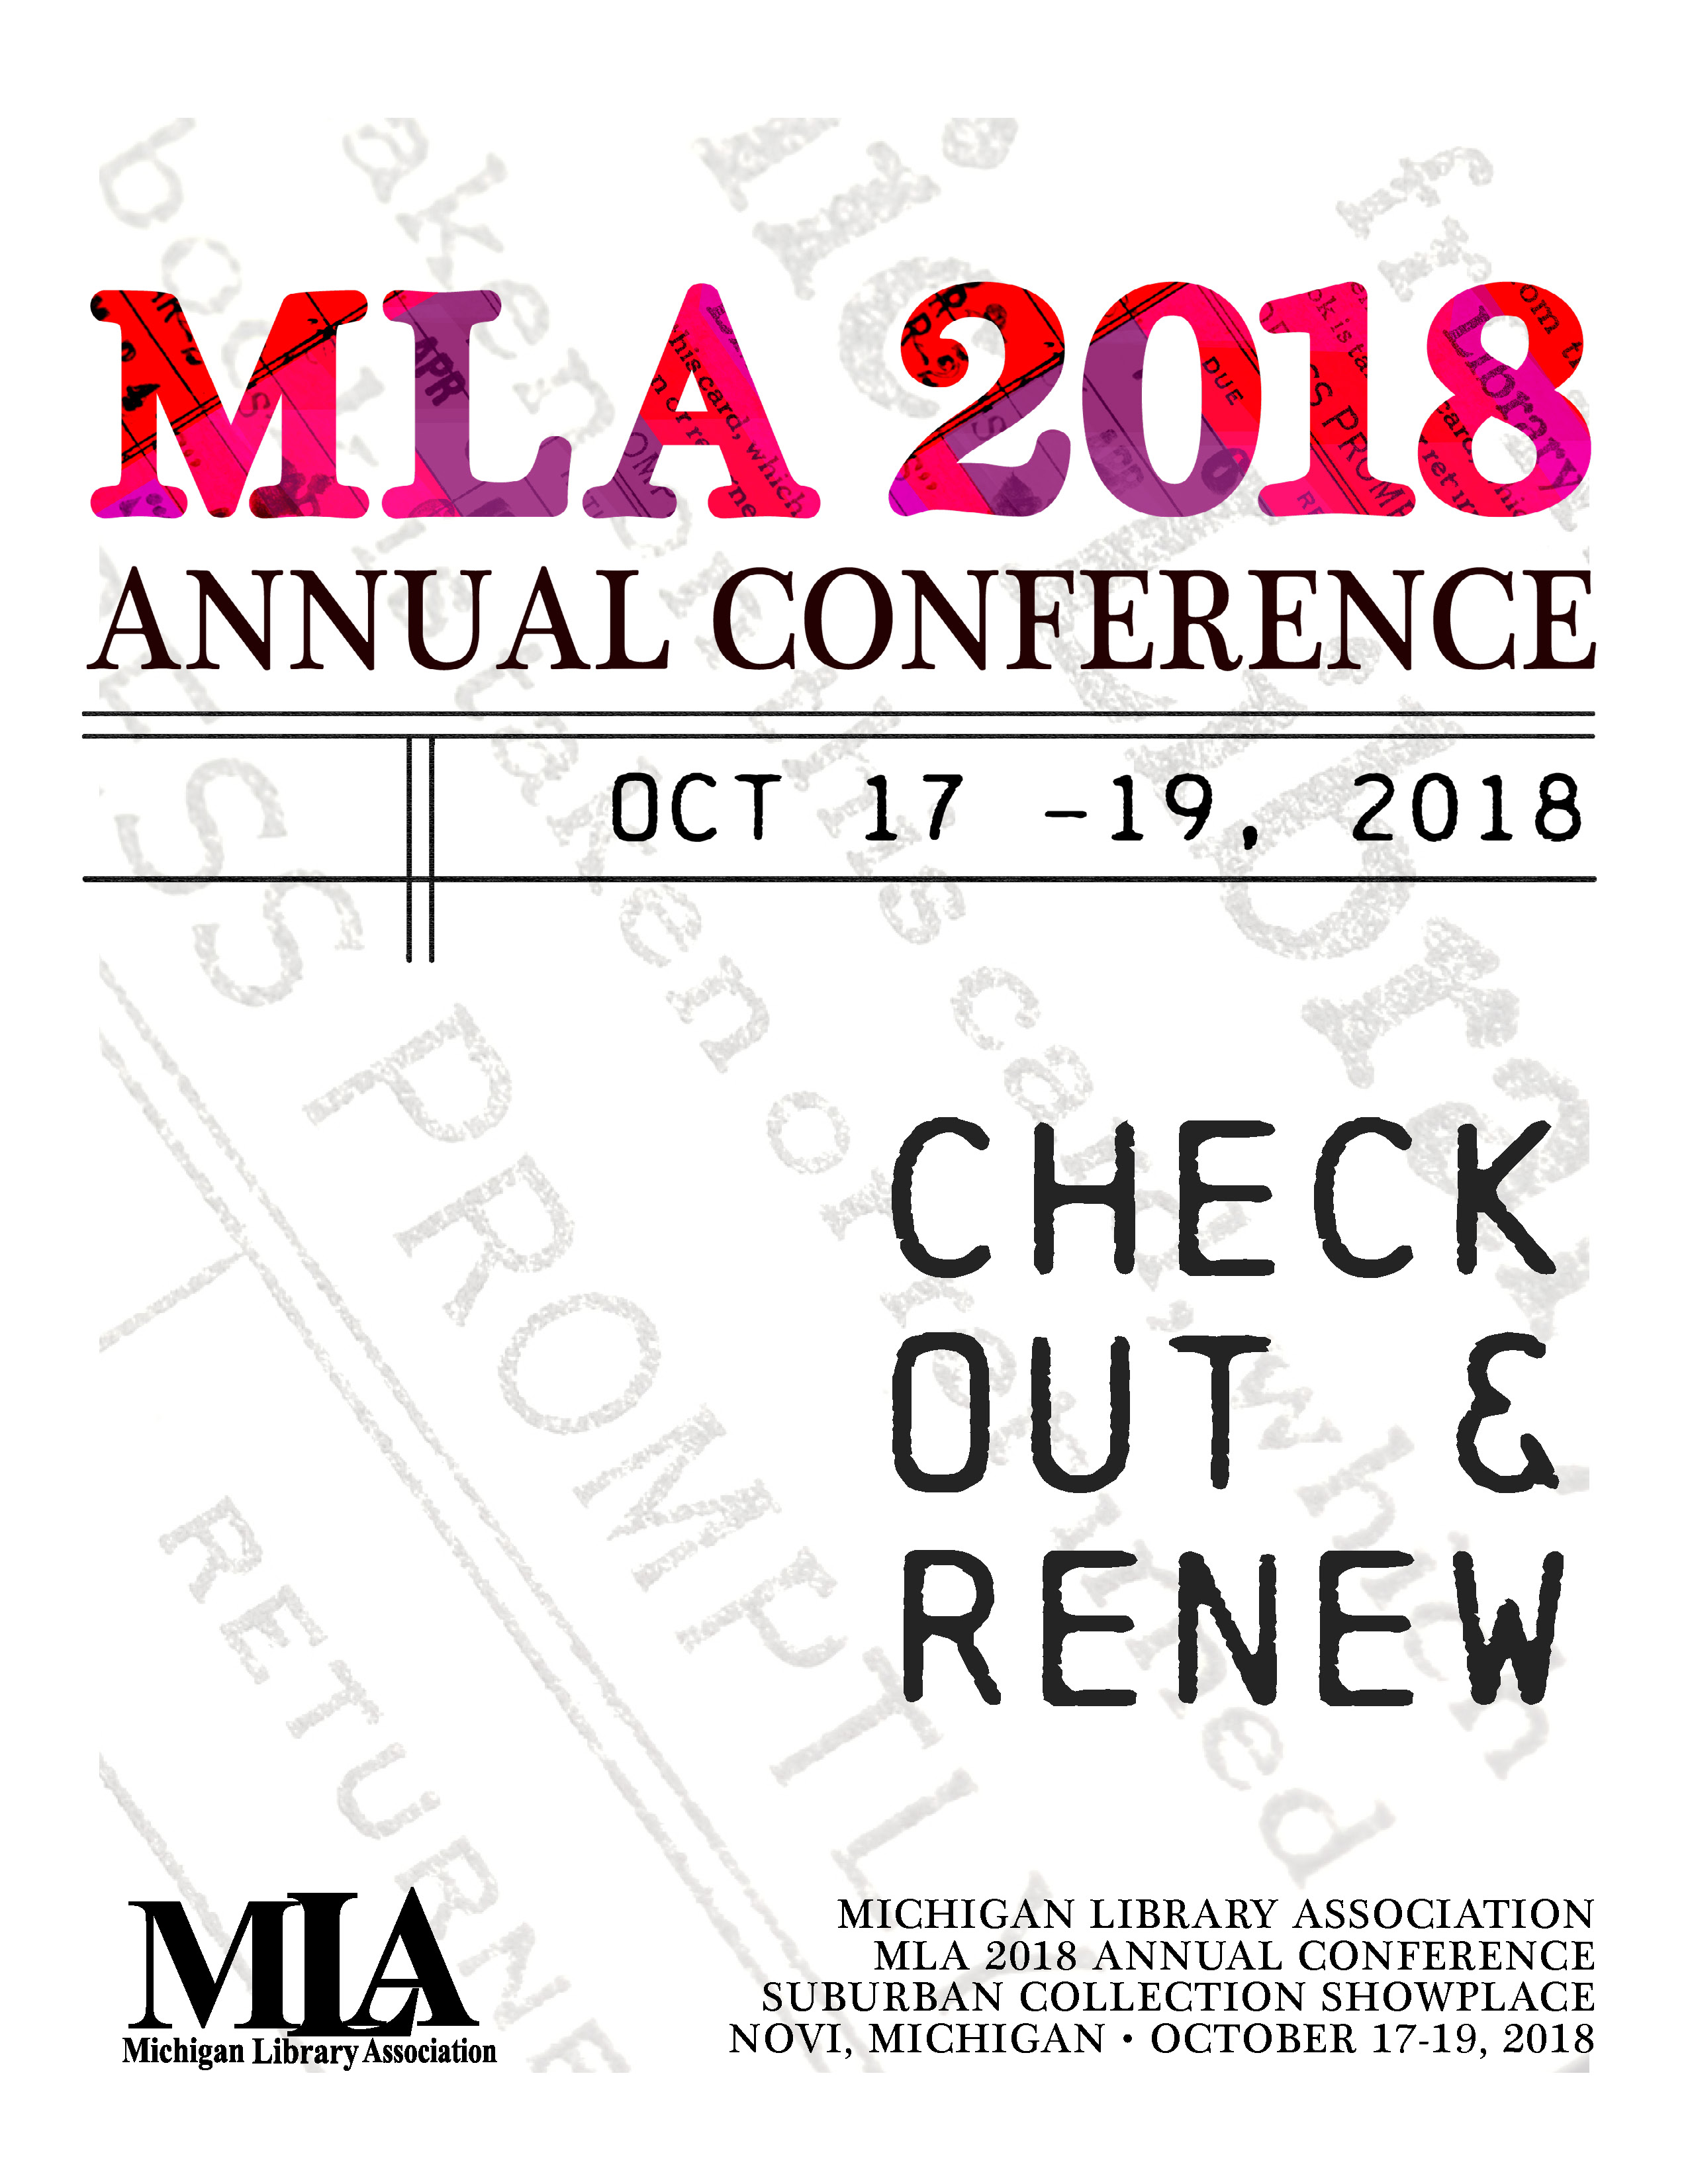 MLA 2018 Program Book Cover image - linked to program book pdf